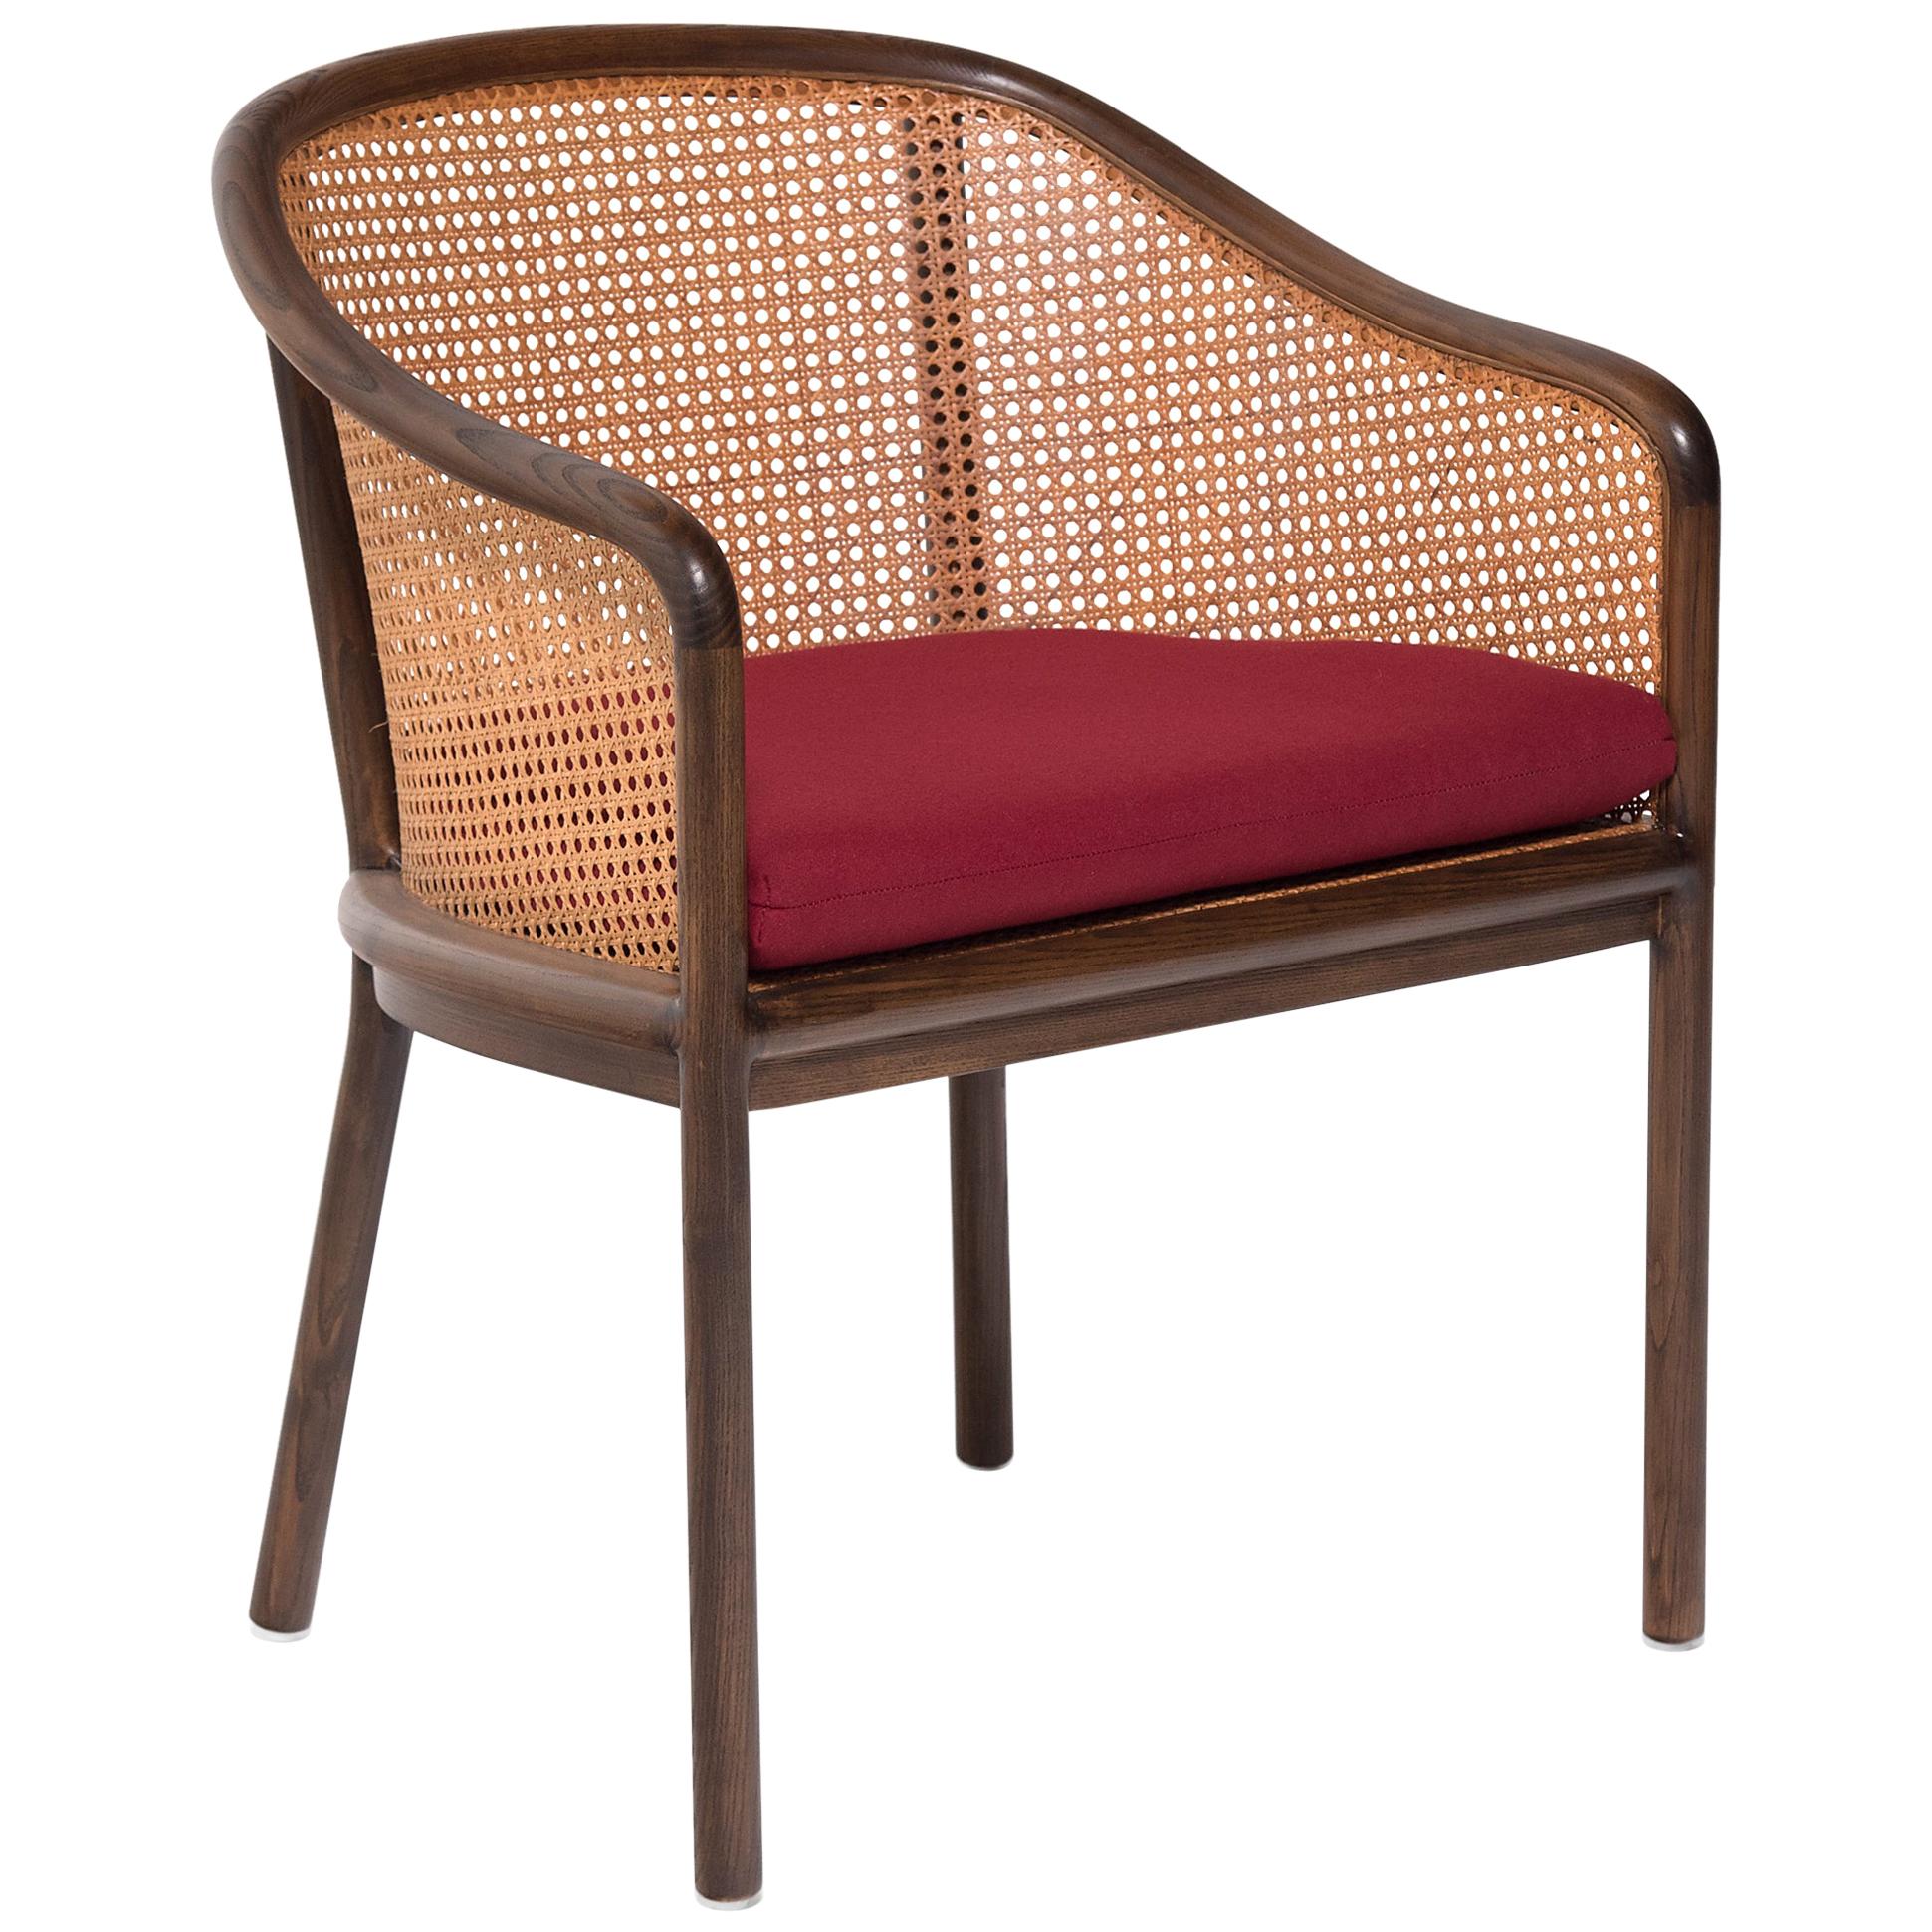 Ward Bennett Cane Landmark Lounge Chair with Red Cushion